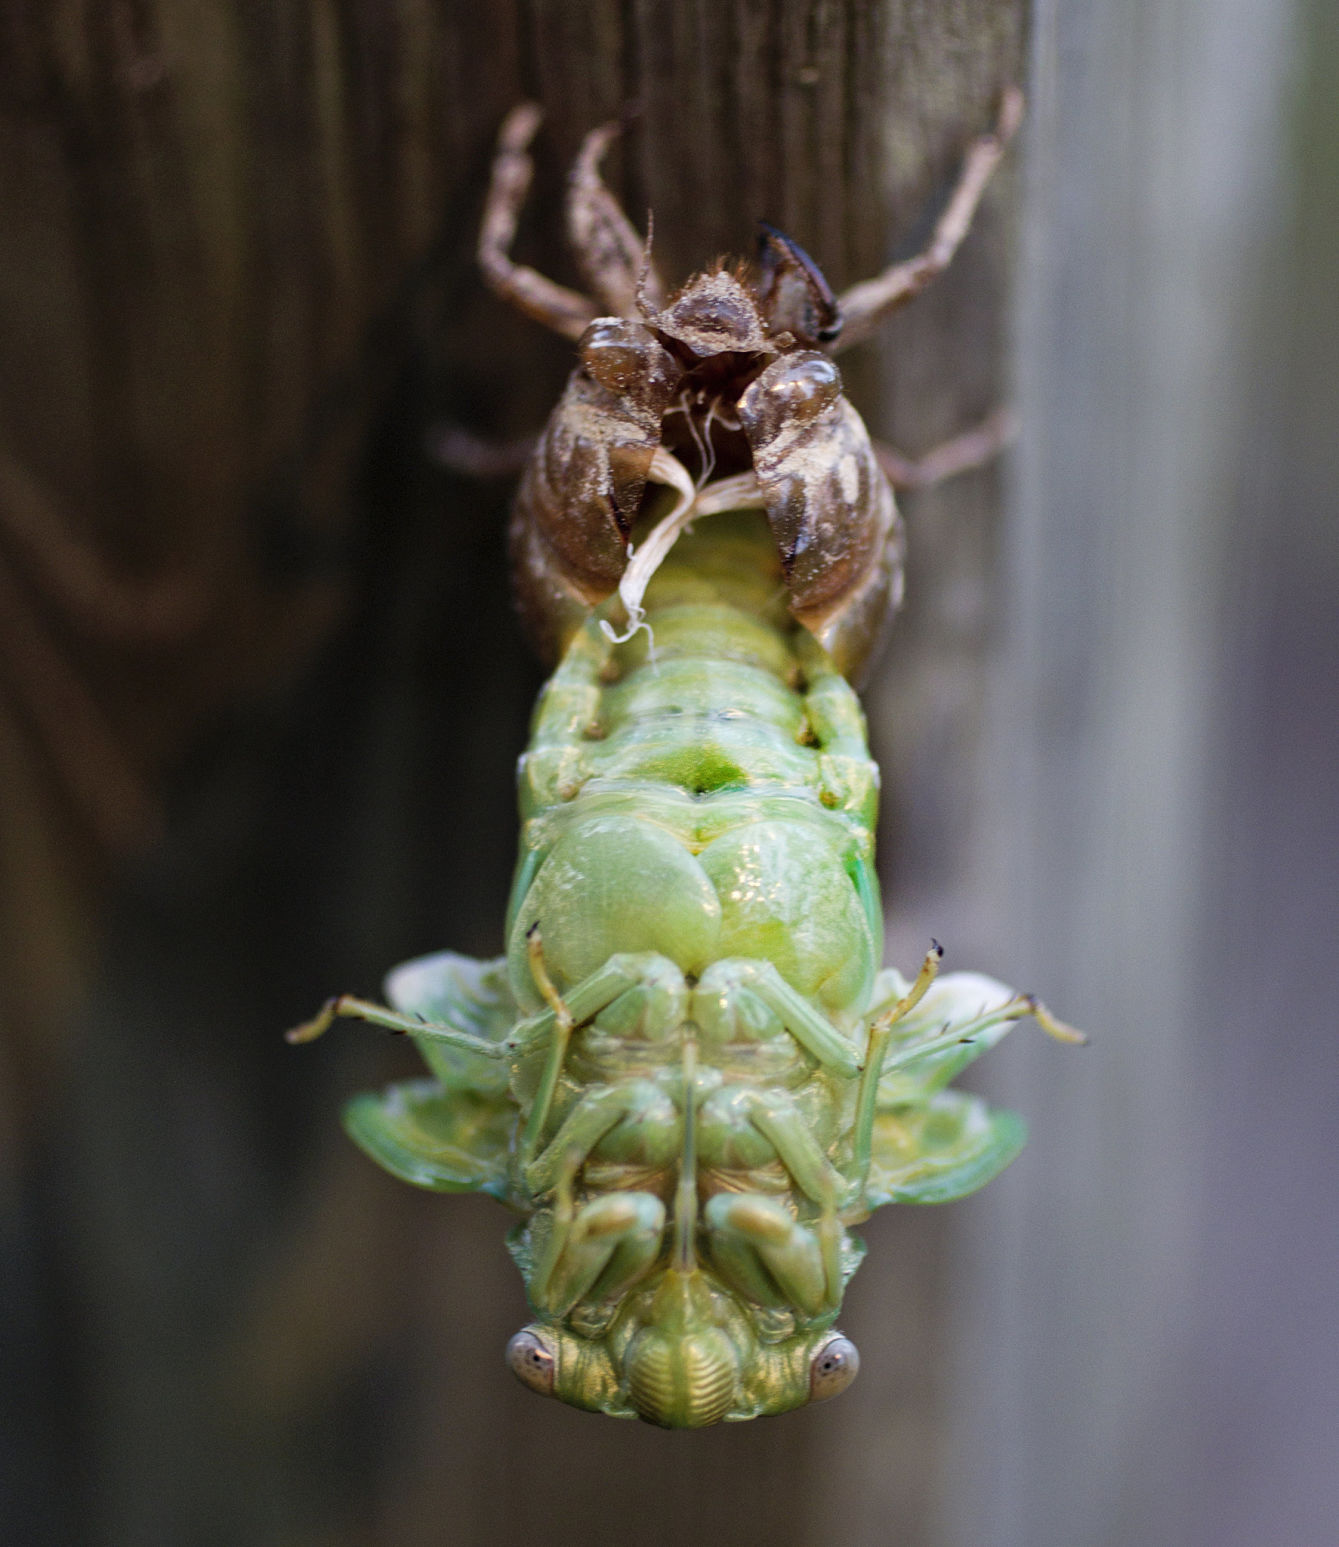 cicada holes